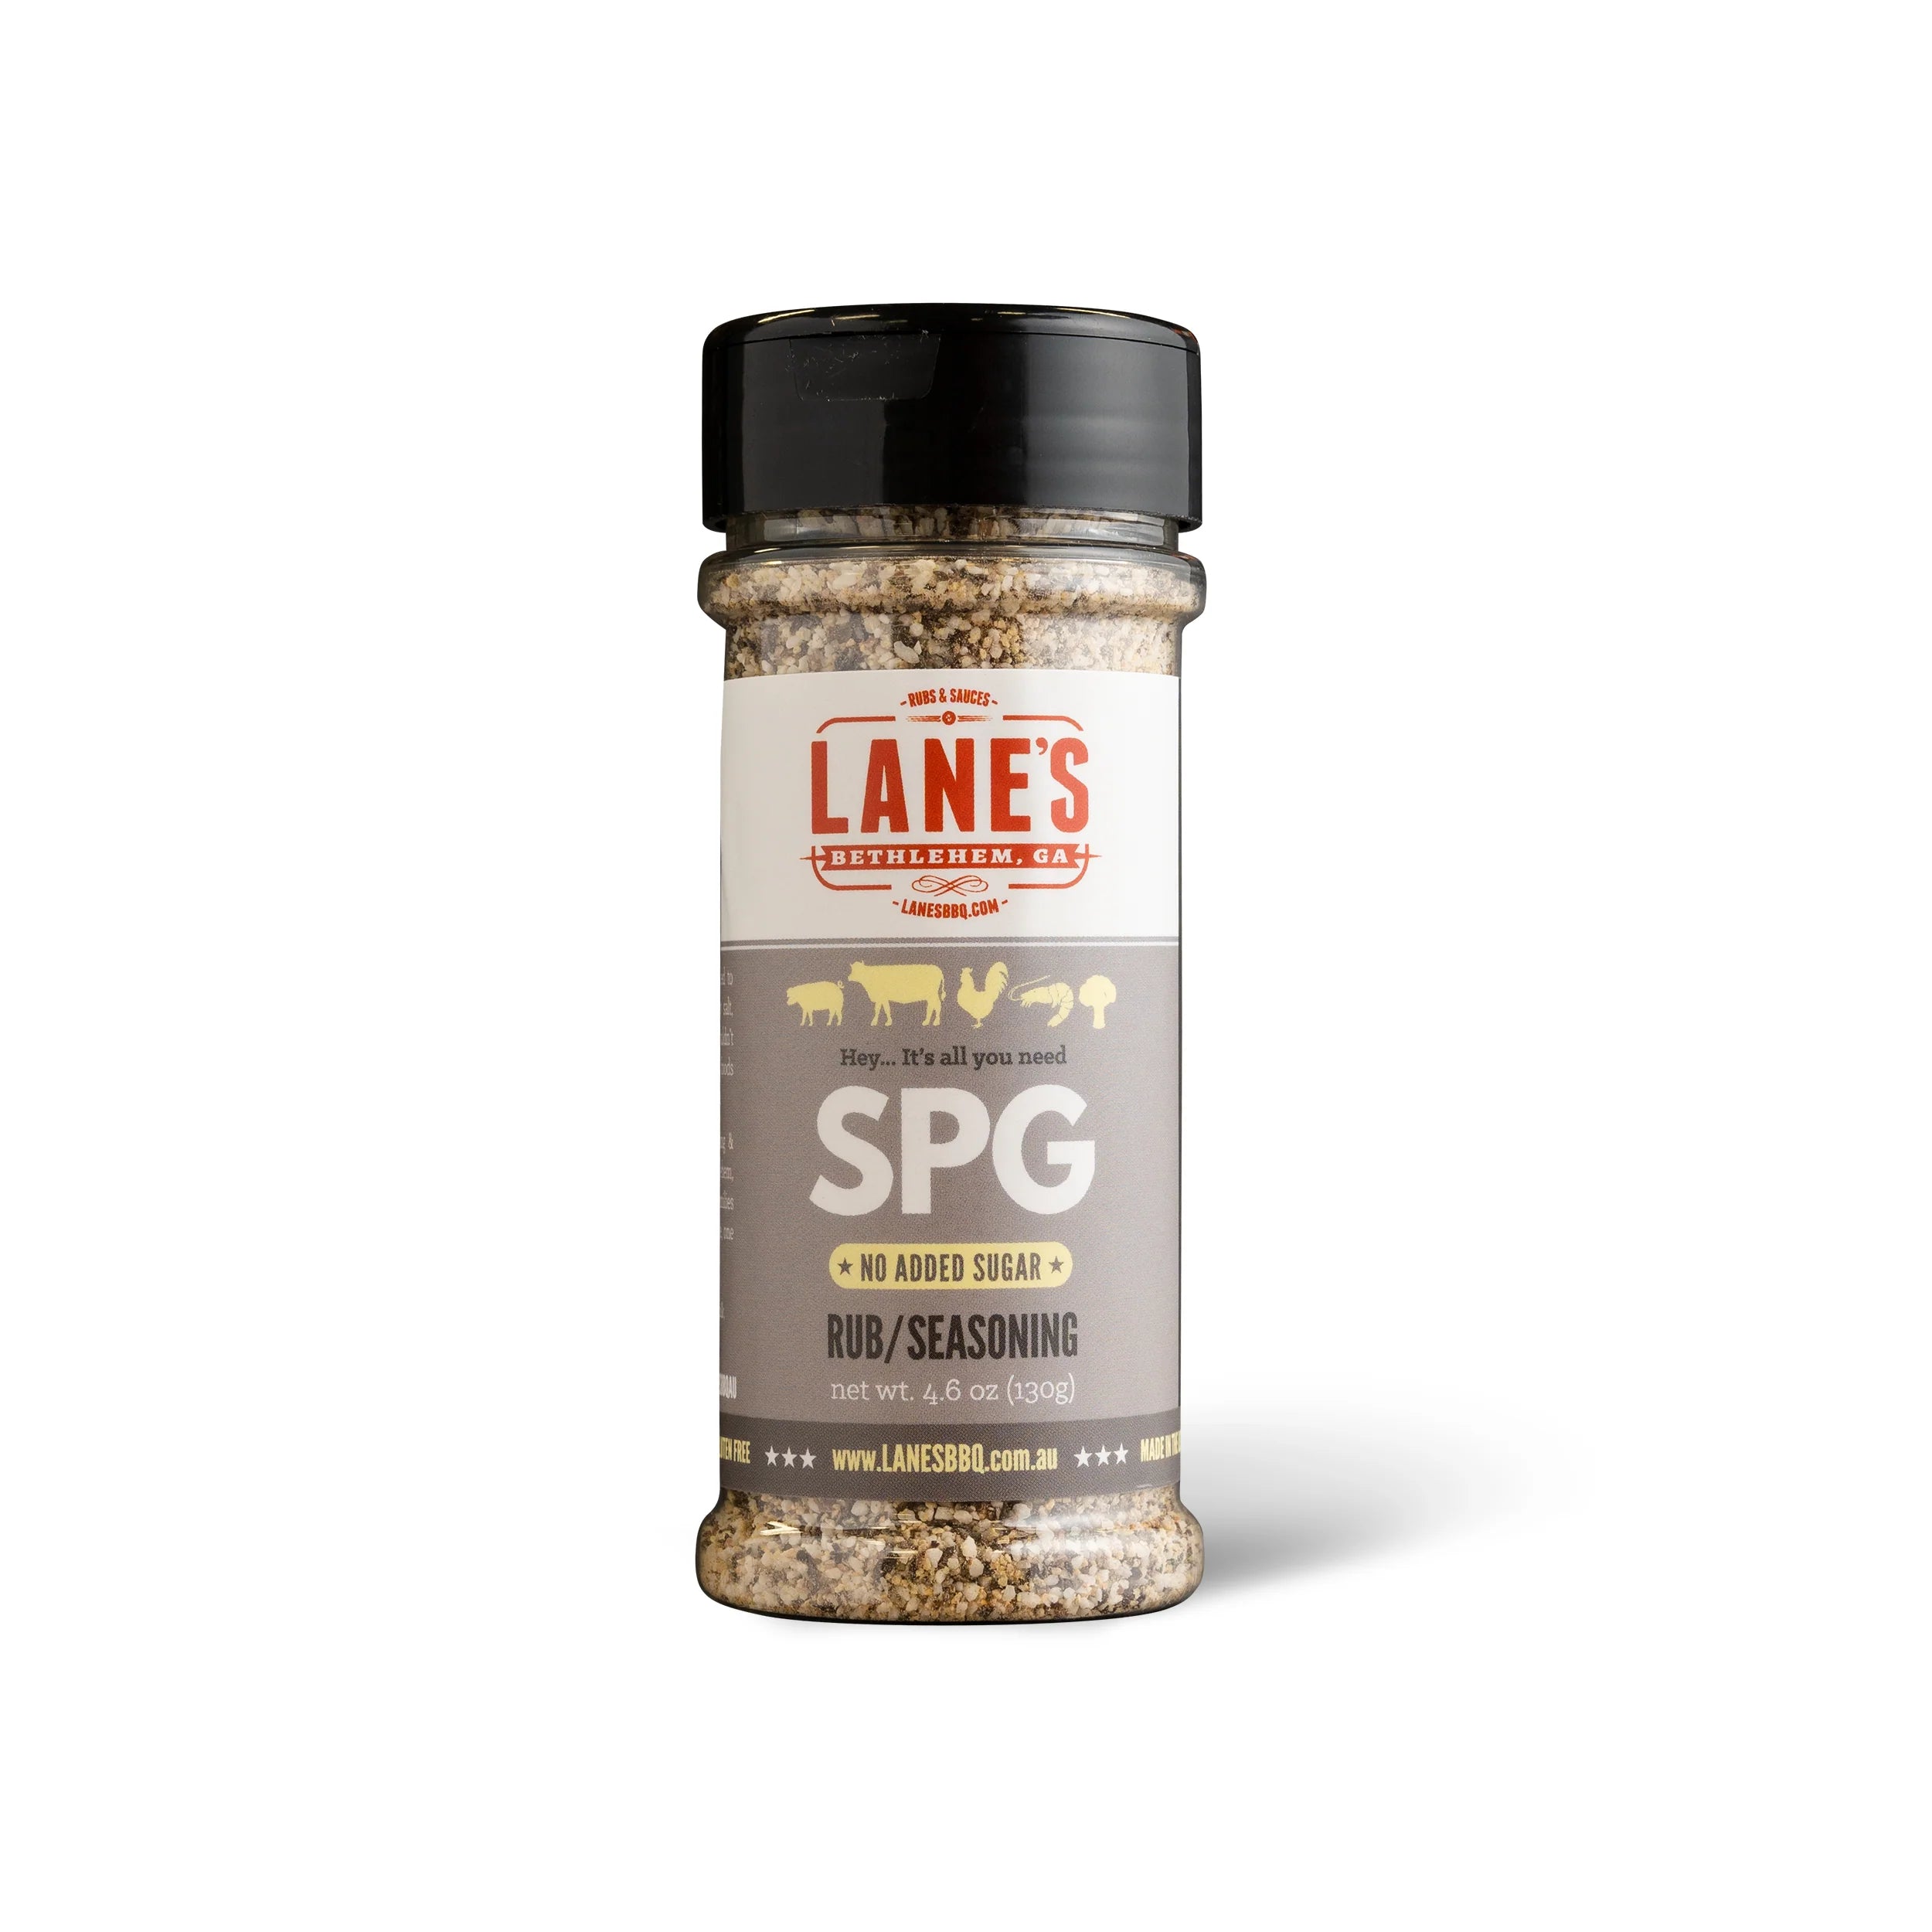 Lane's BBQ SPG (Salt, Pepper, Garlic) 130g